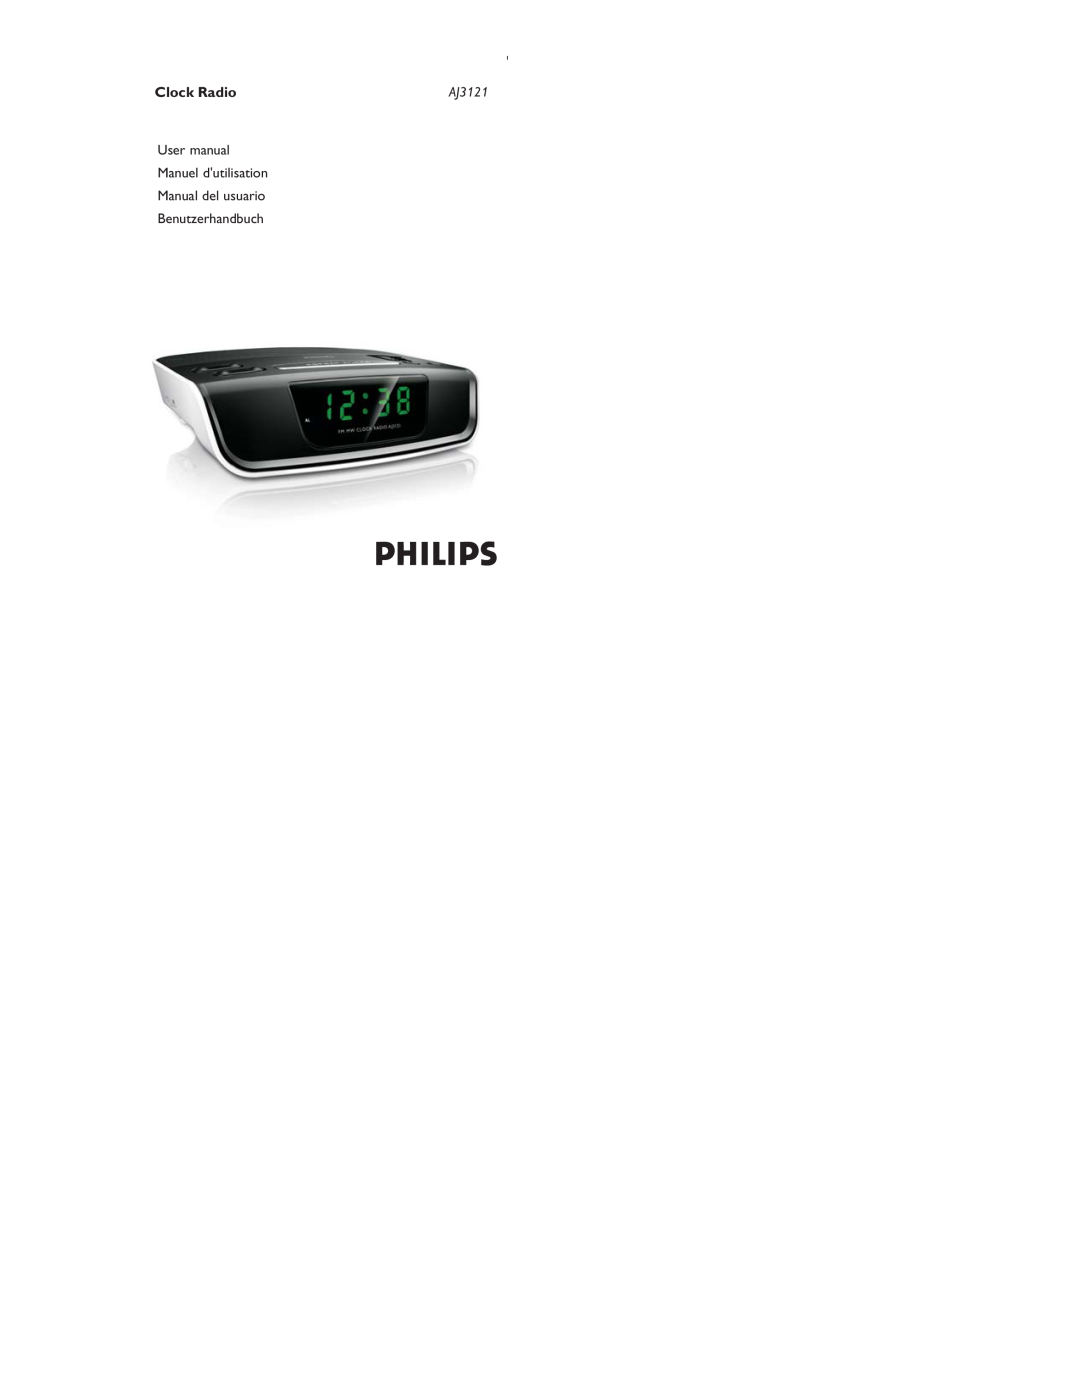 Philips AJ3121 user manual User manual Manuel dutilisation Manual del usuario Benutzerhandbuch, Clock Radio 